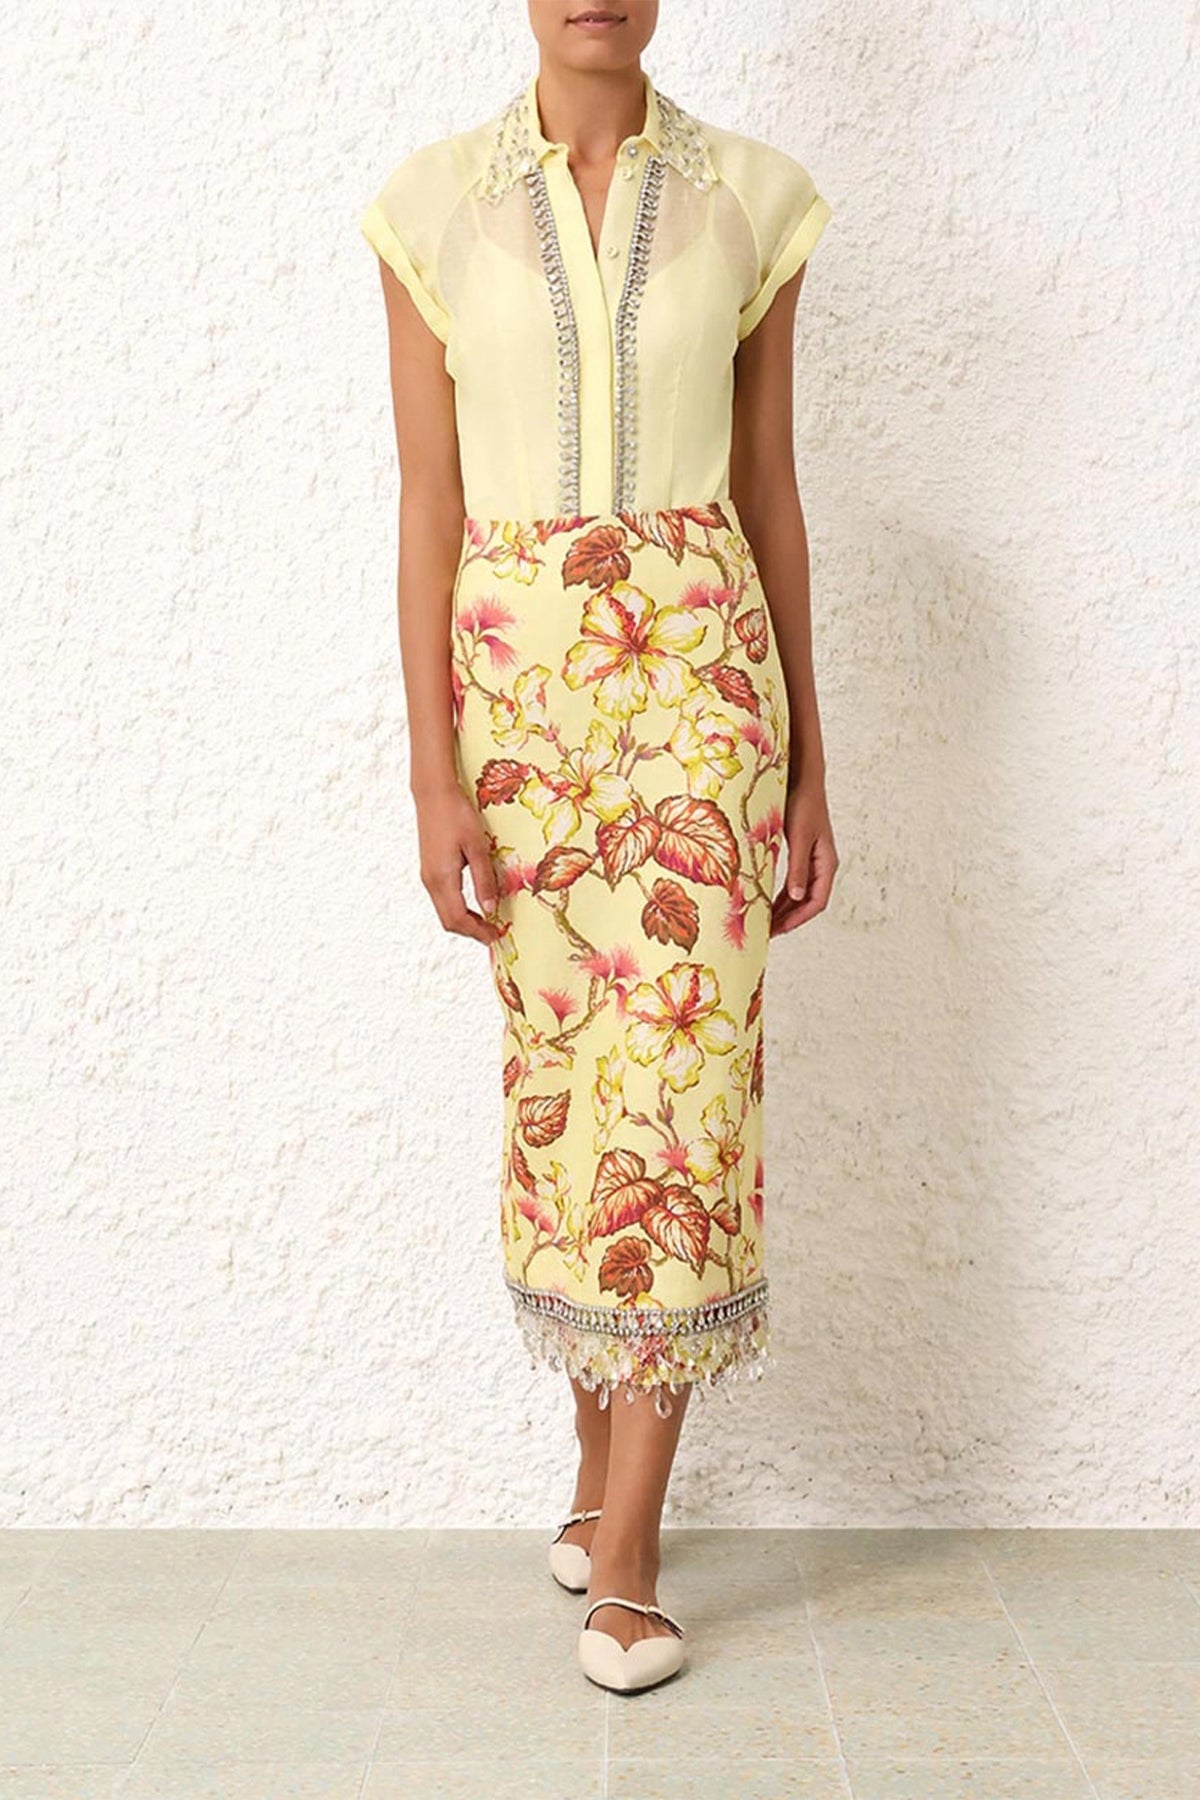 Matchmaker Diamante Skirt in Yellow Hibiscus - shop-olivia.com